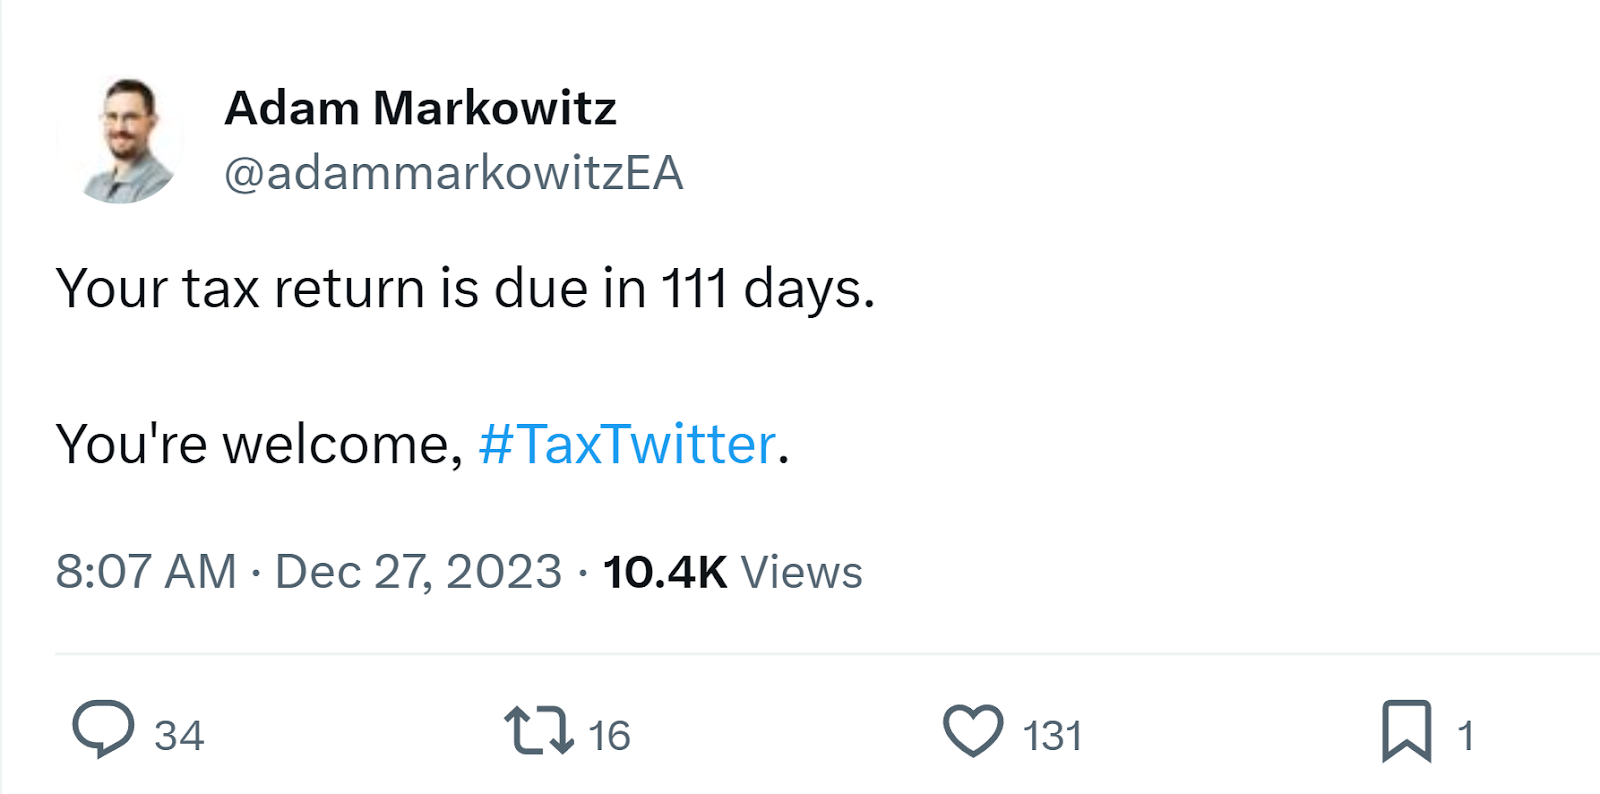 Adam Markowitz tweet about the upcoming tax filing deadline